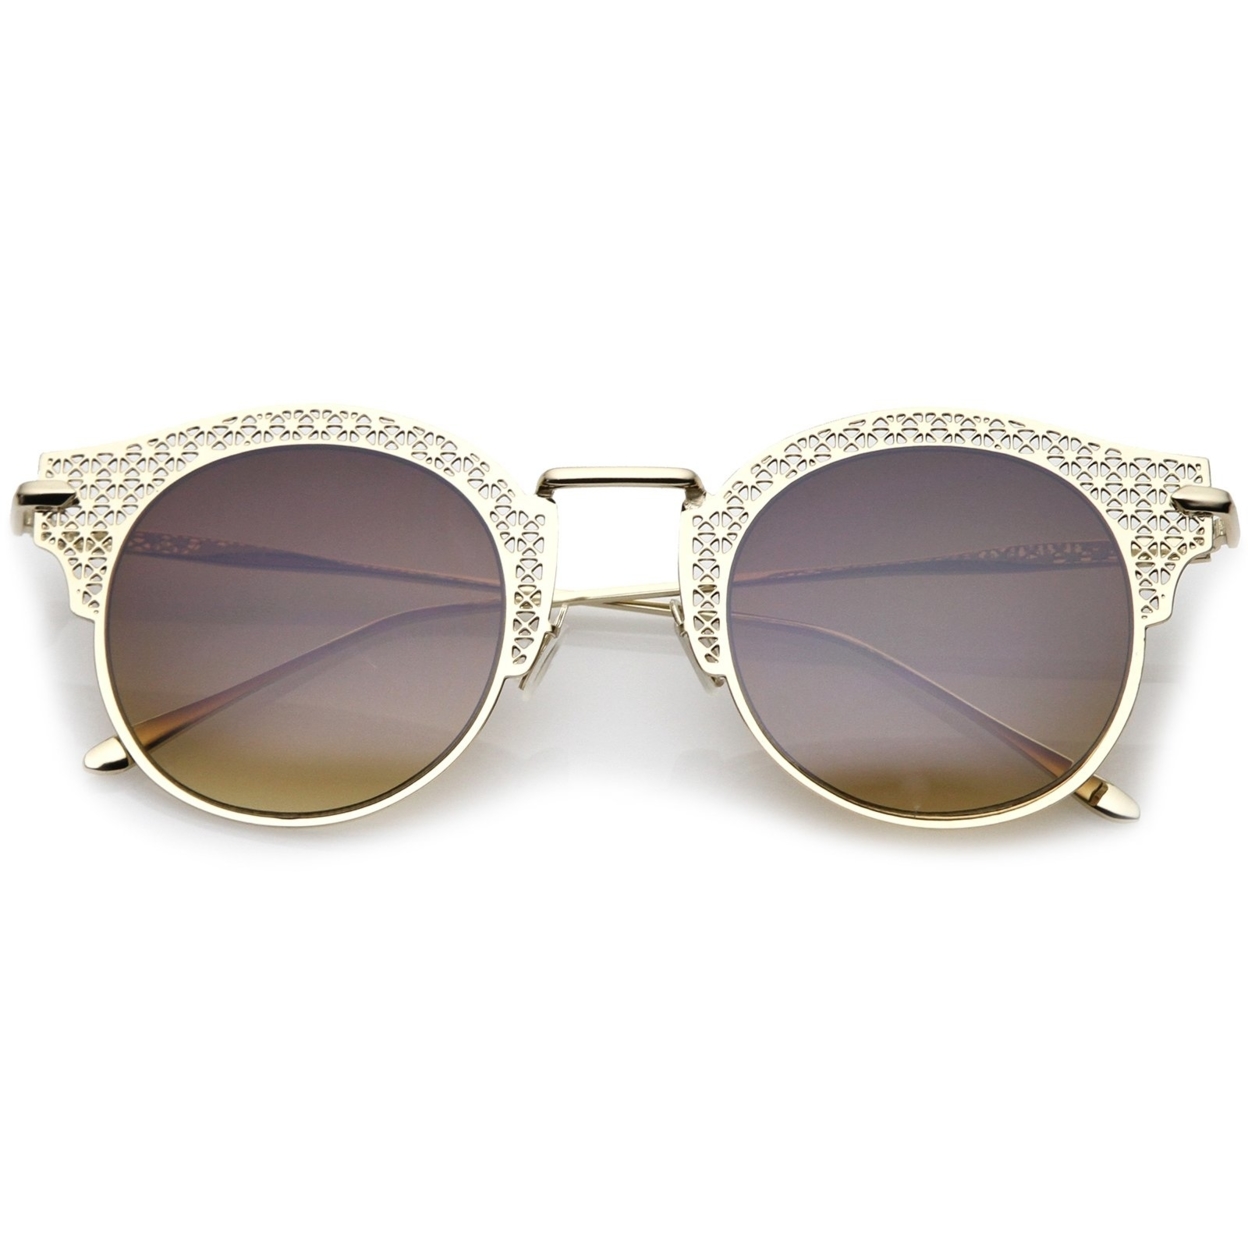 Women's Open Metal Cutout Slim Arm Round Flat Lens Half Frame Sunglasses 50mm - Matte Black / Silver Mirror